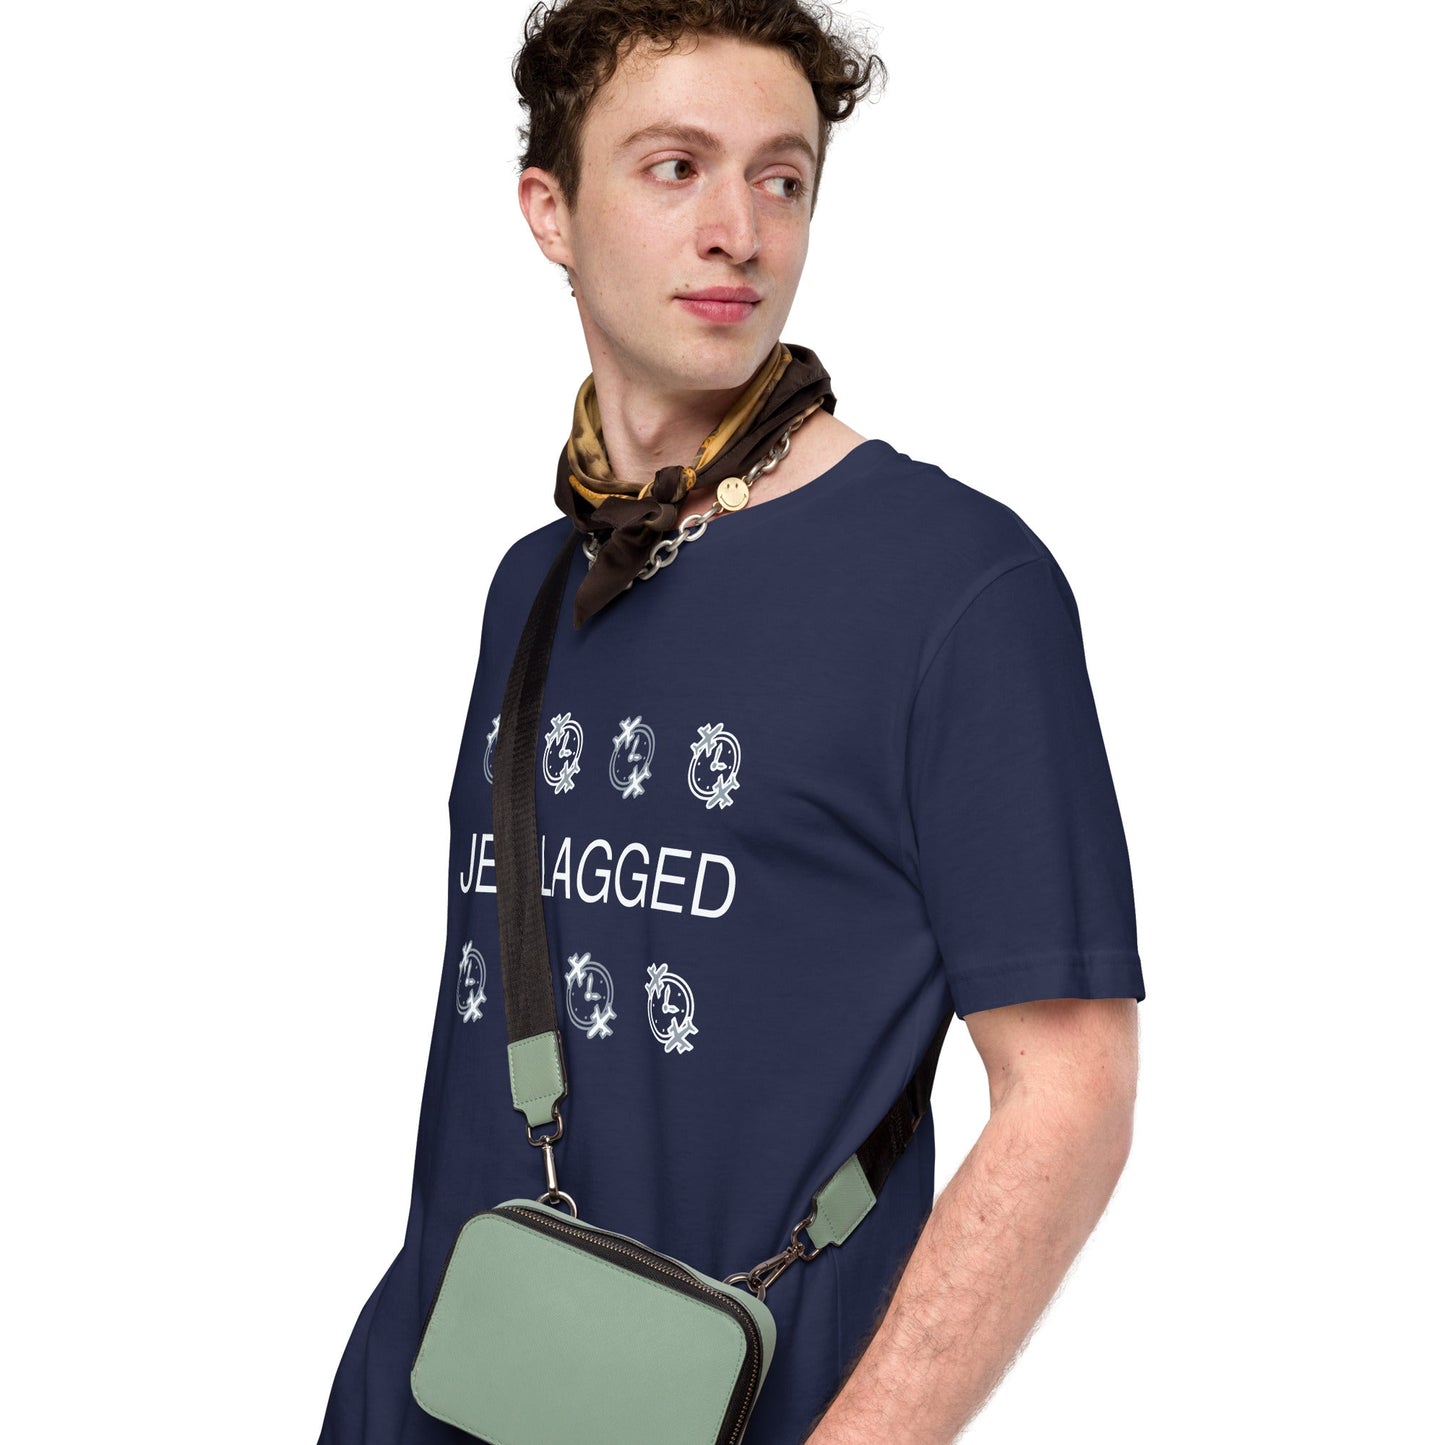 Jet Lagged | Unisex t - shirt